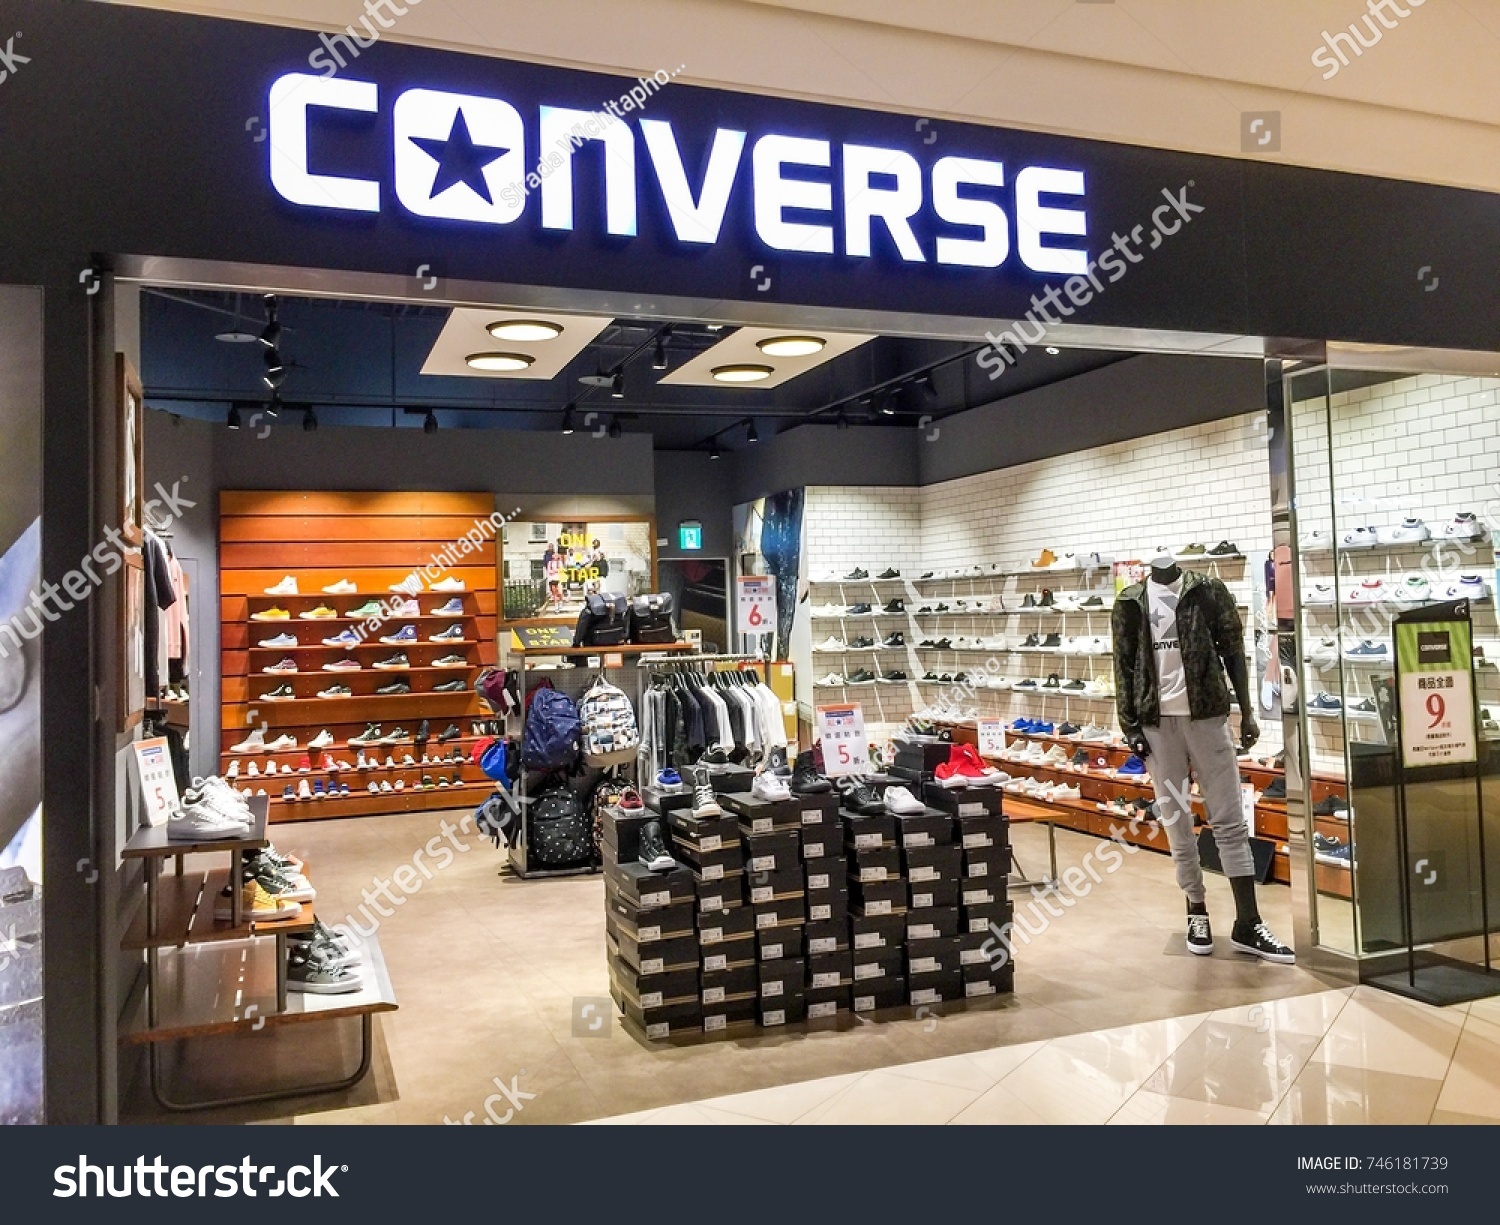 converse shop